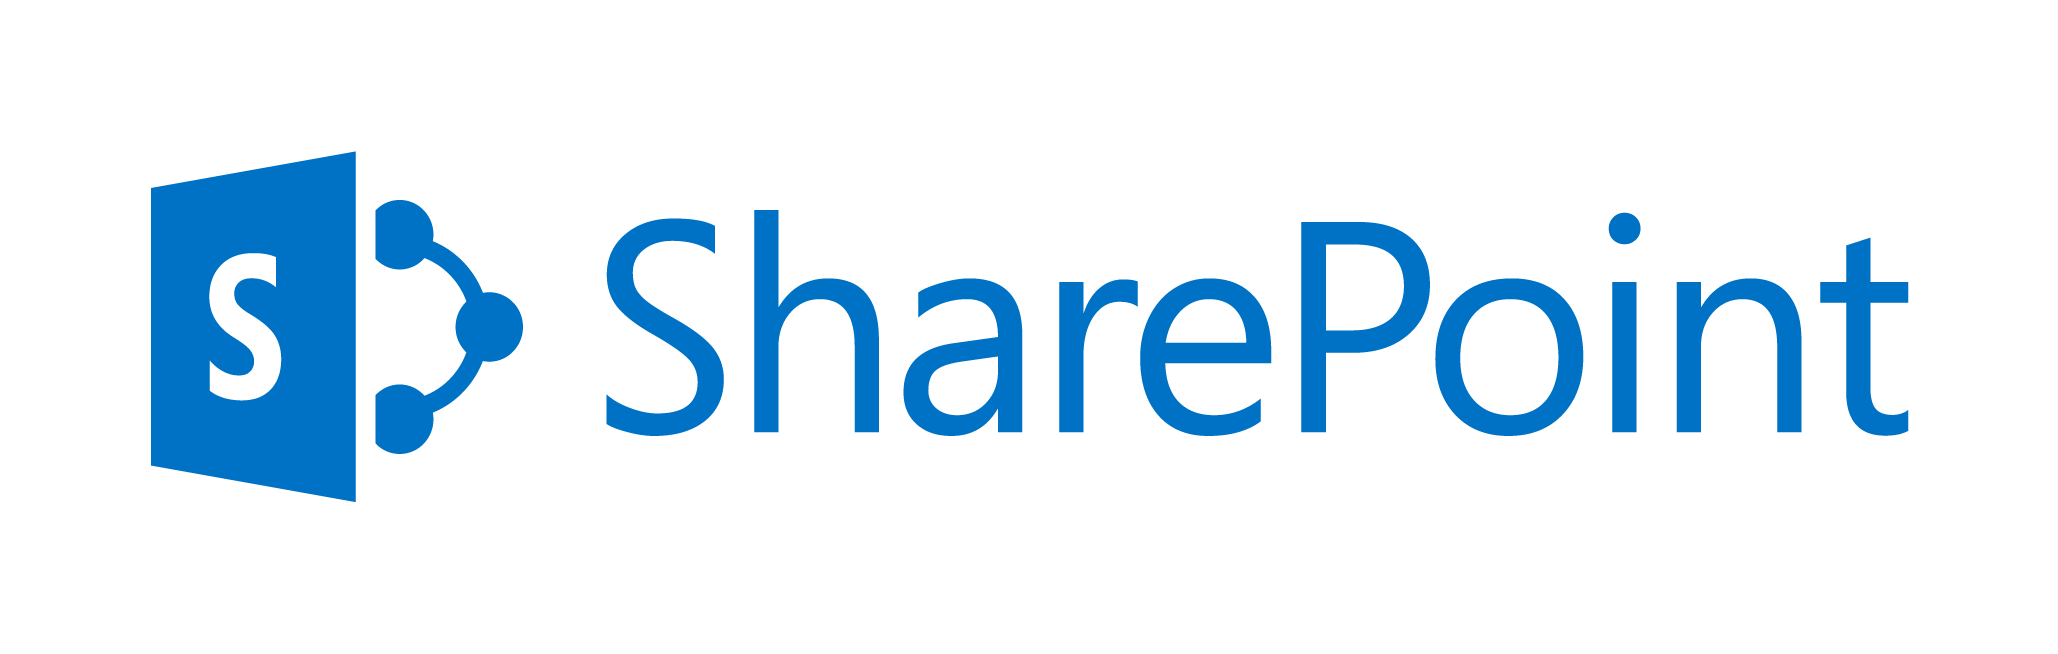 Microsoft Sharepoint 2013 Logo